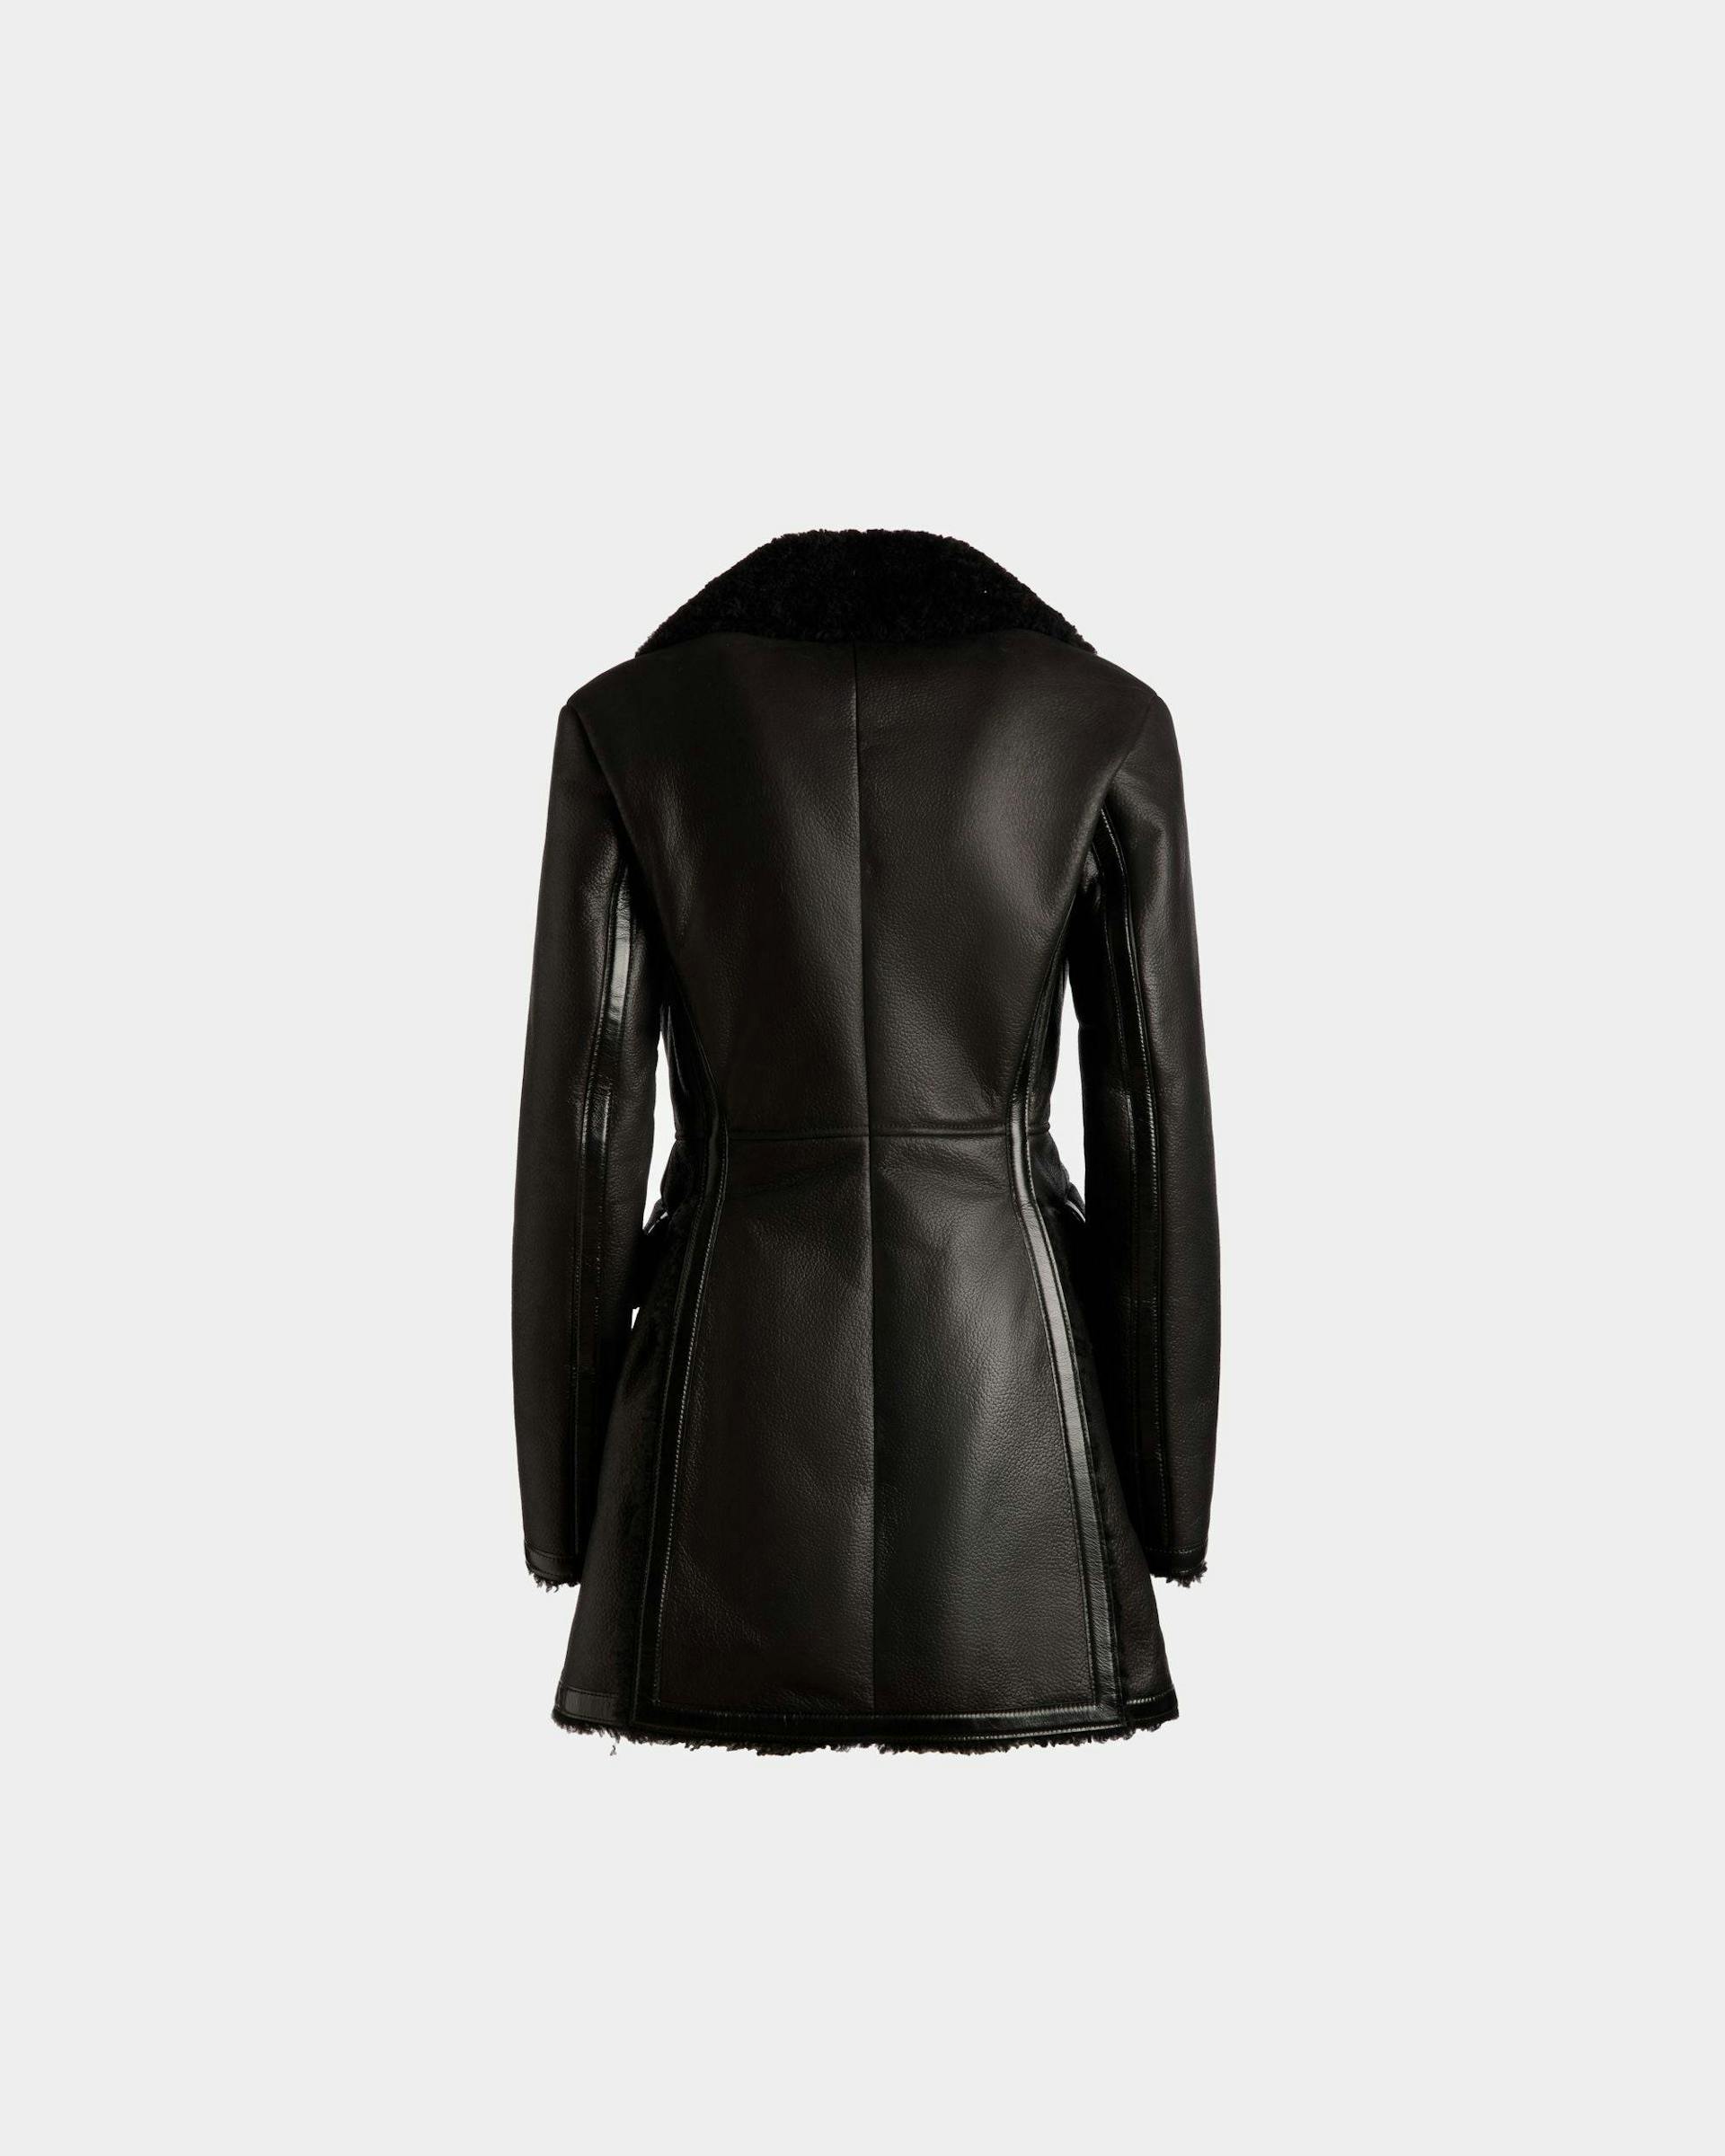 Women's Wool-lined Coat In Black Leather | Bally | Still Life Back